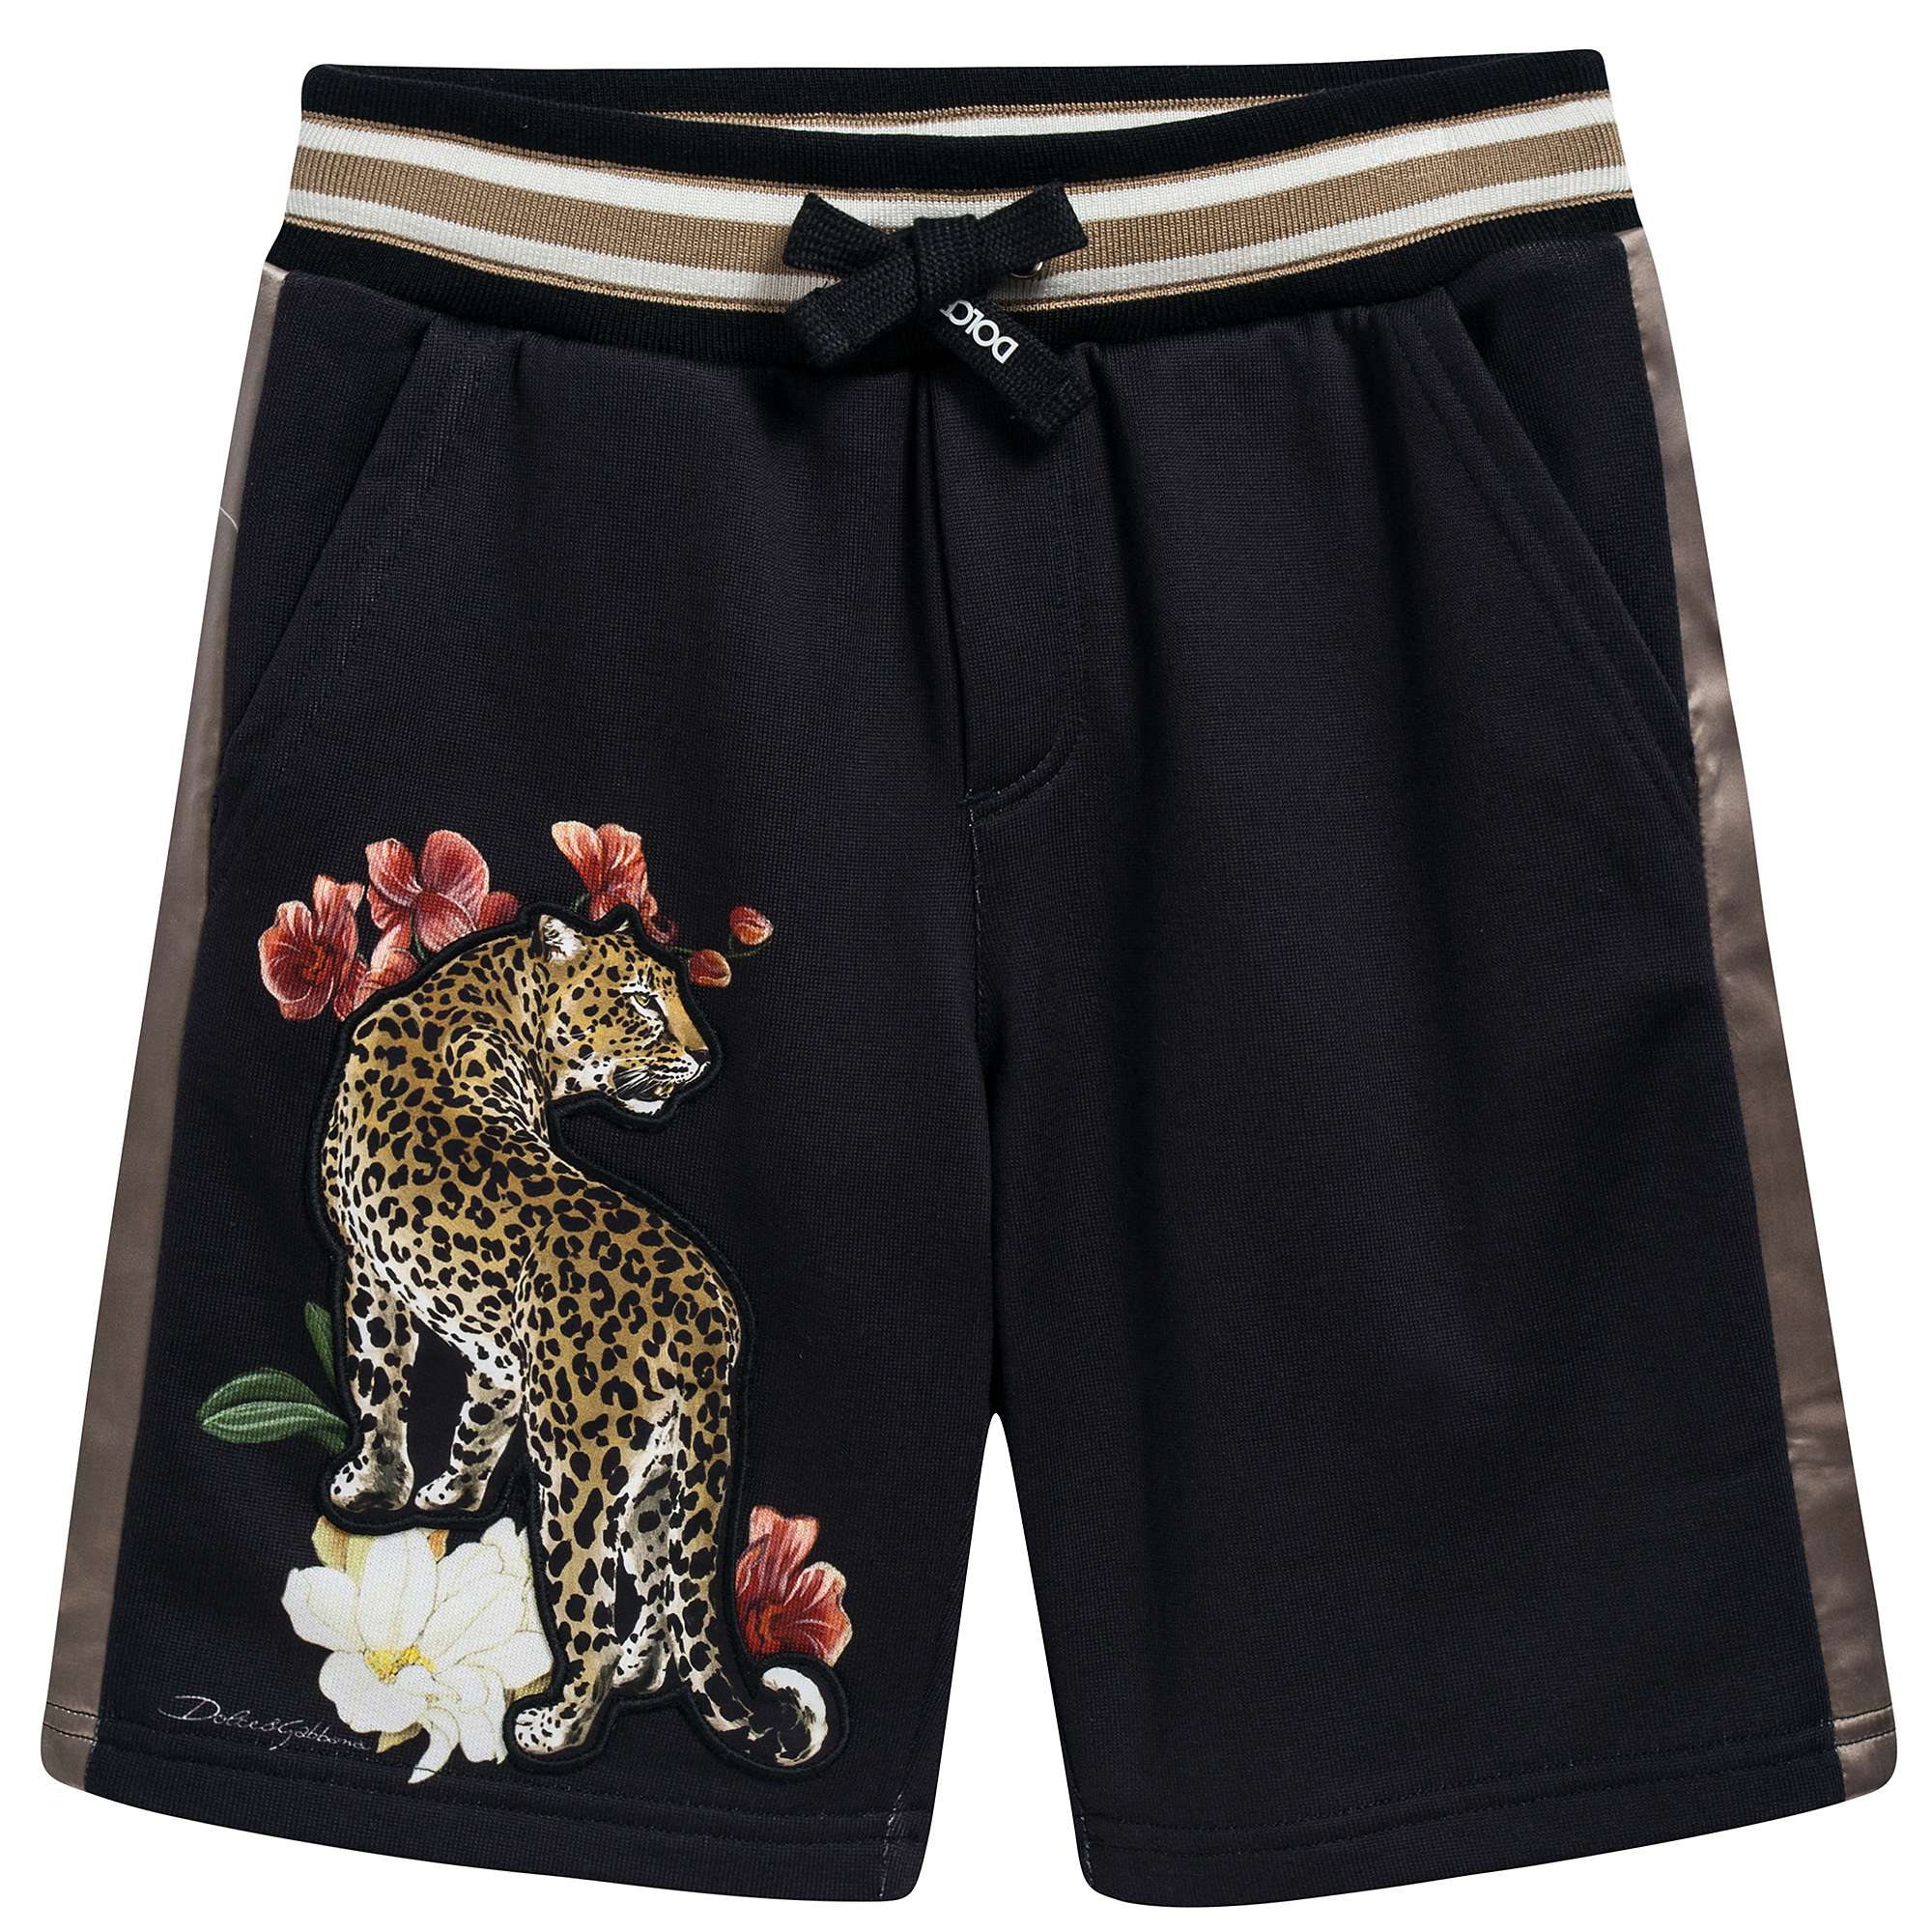 Boys Black "Leopard Printed" Cotton Shorts